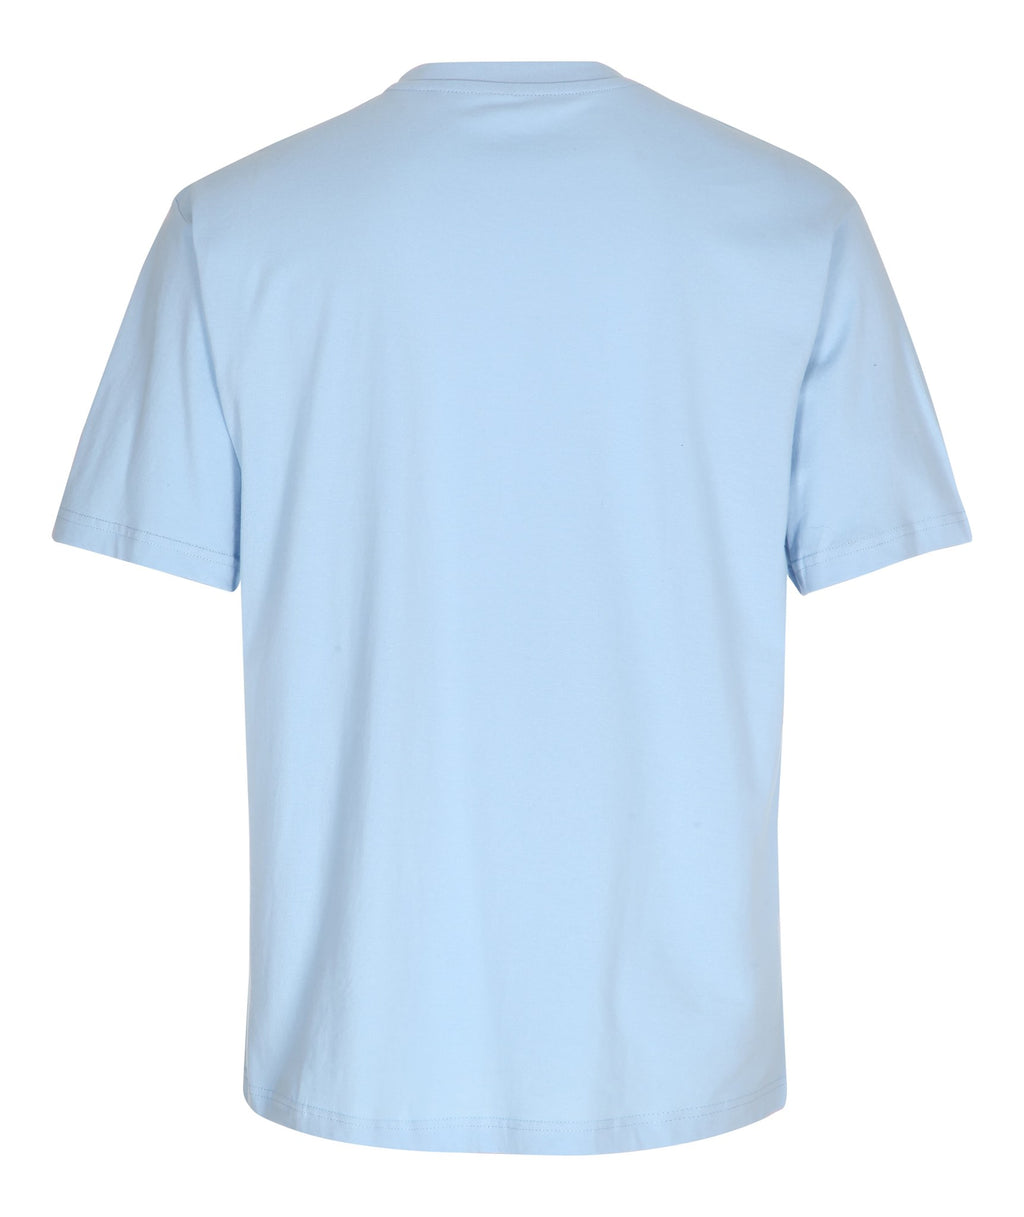 Oversized T-shirt - Light blue